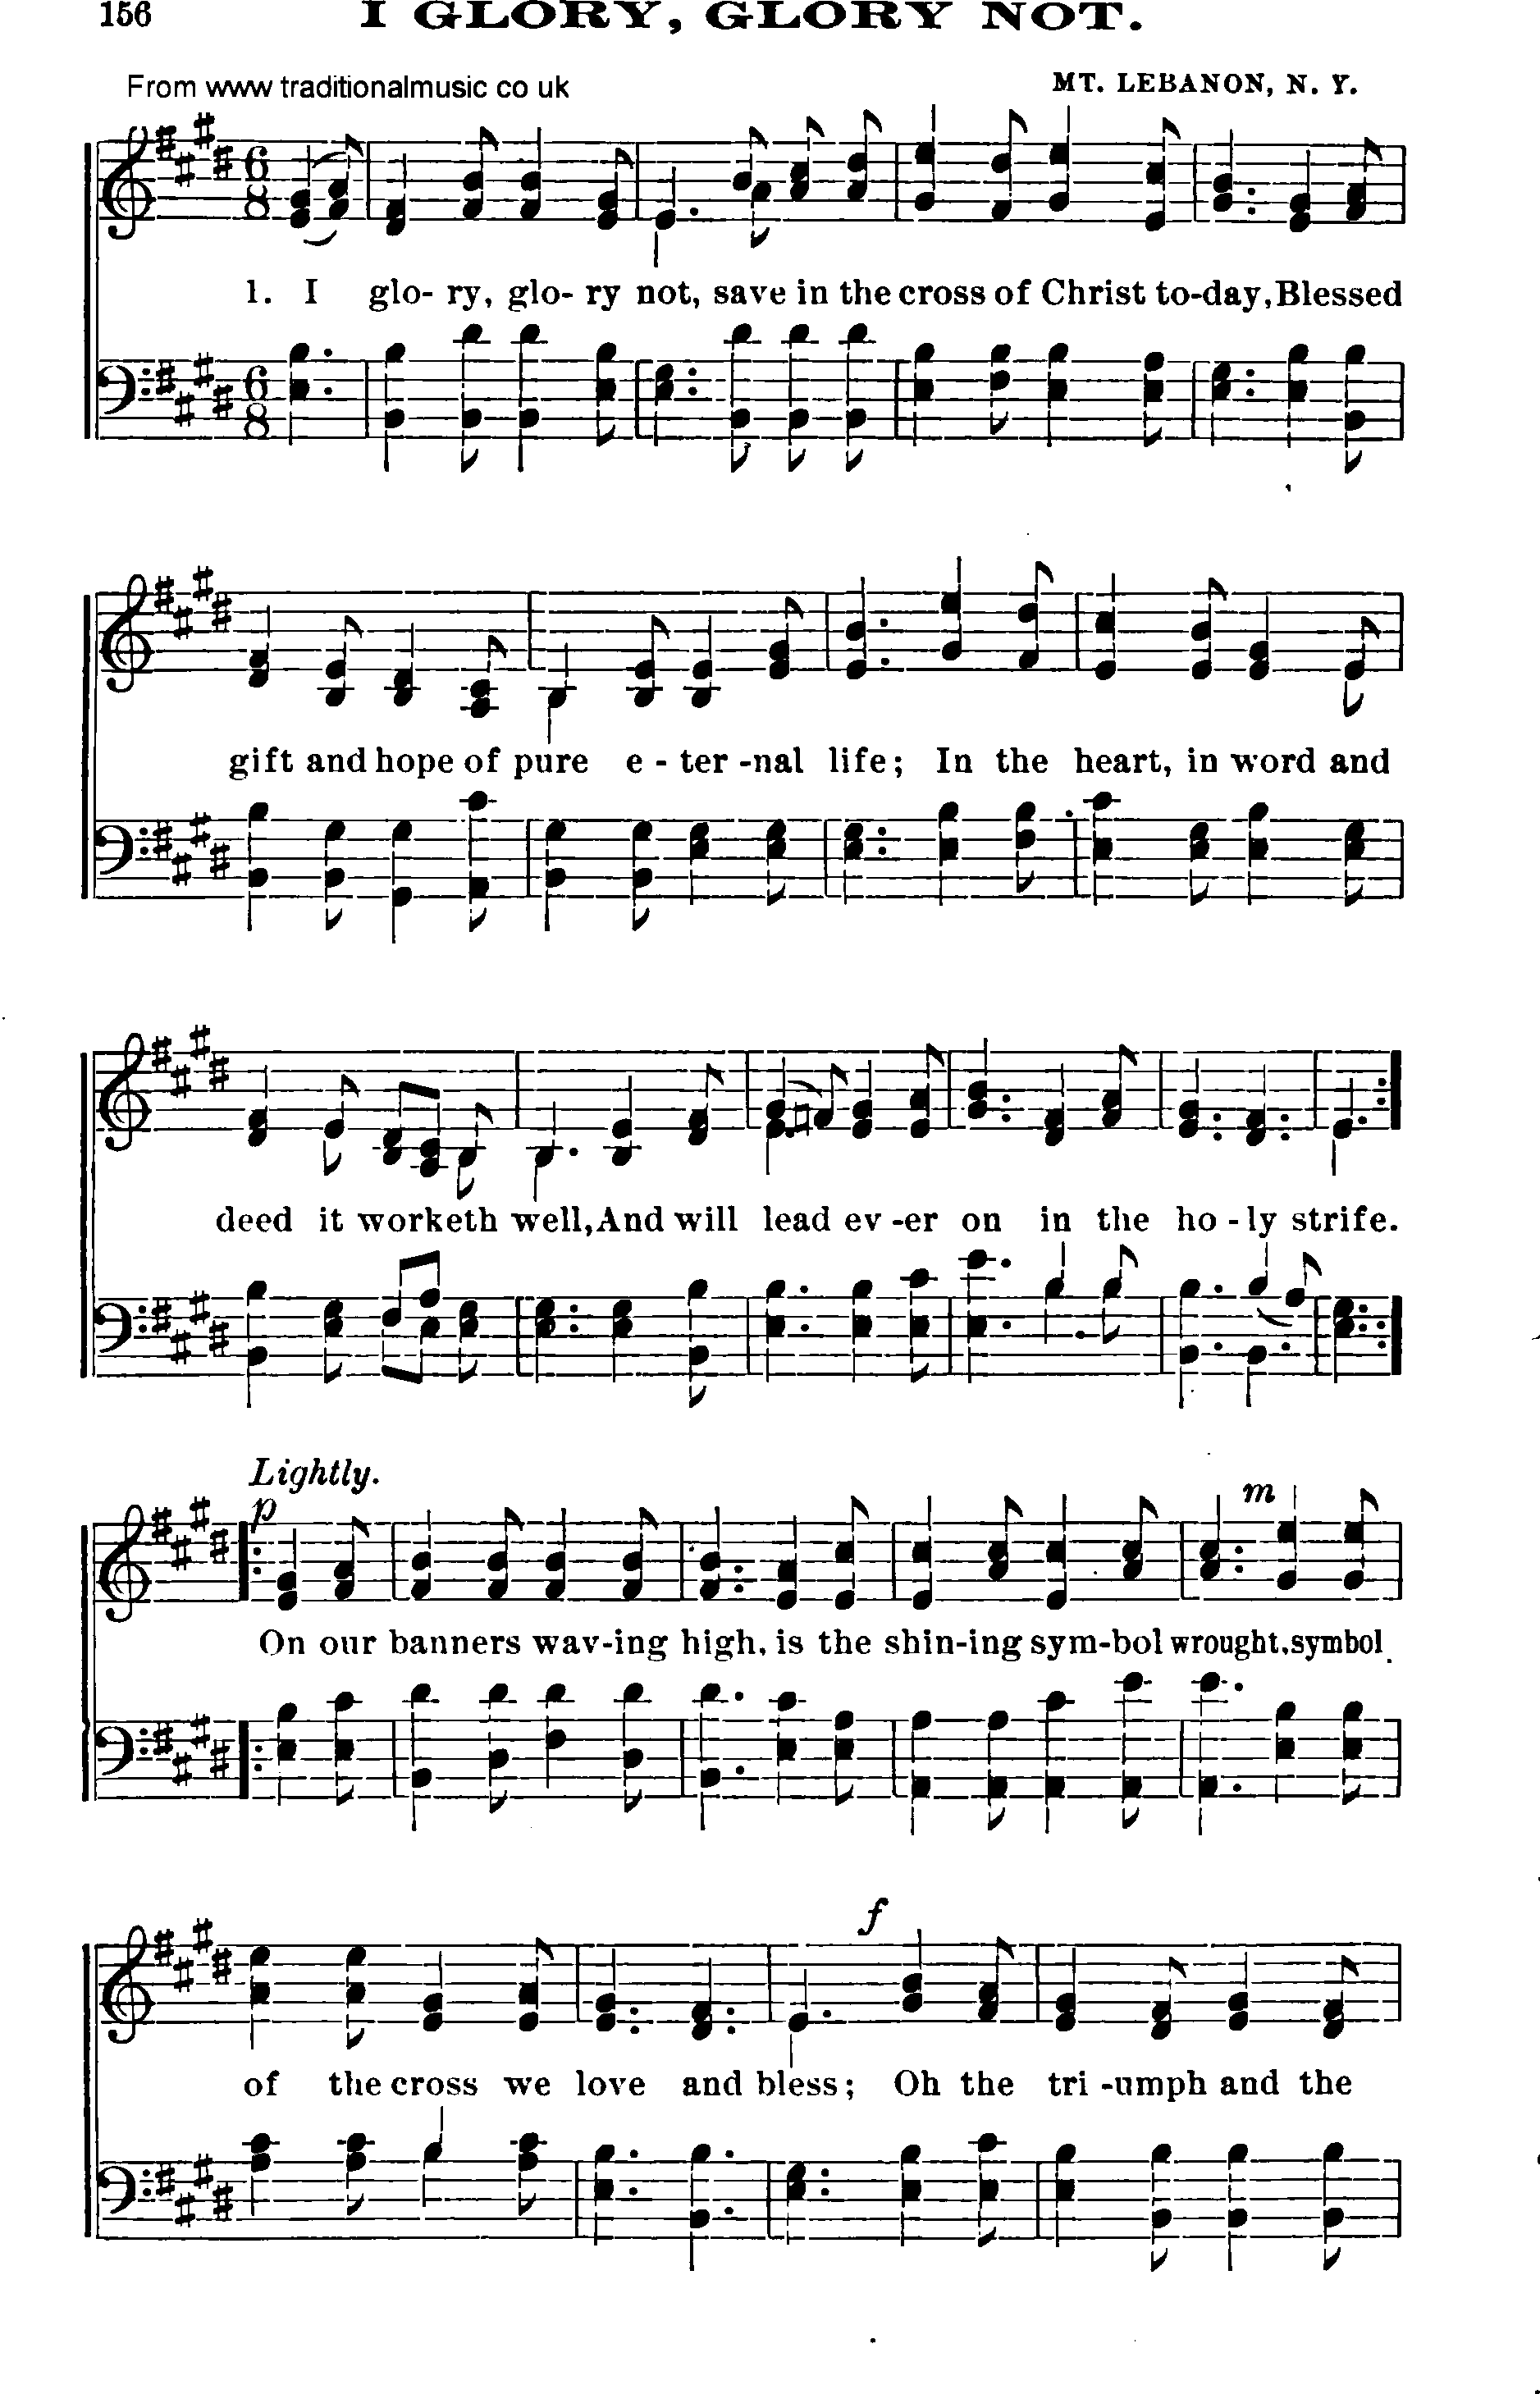 Shaker Music collection, Hymn: I glory, glory not, sheetmusic and PDF